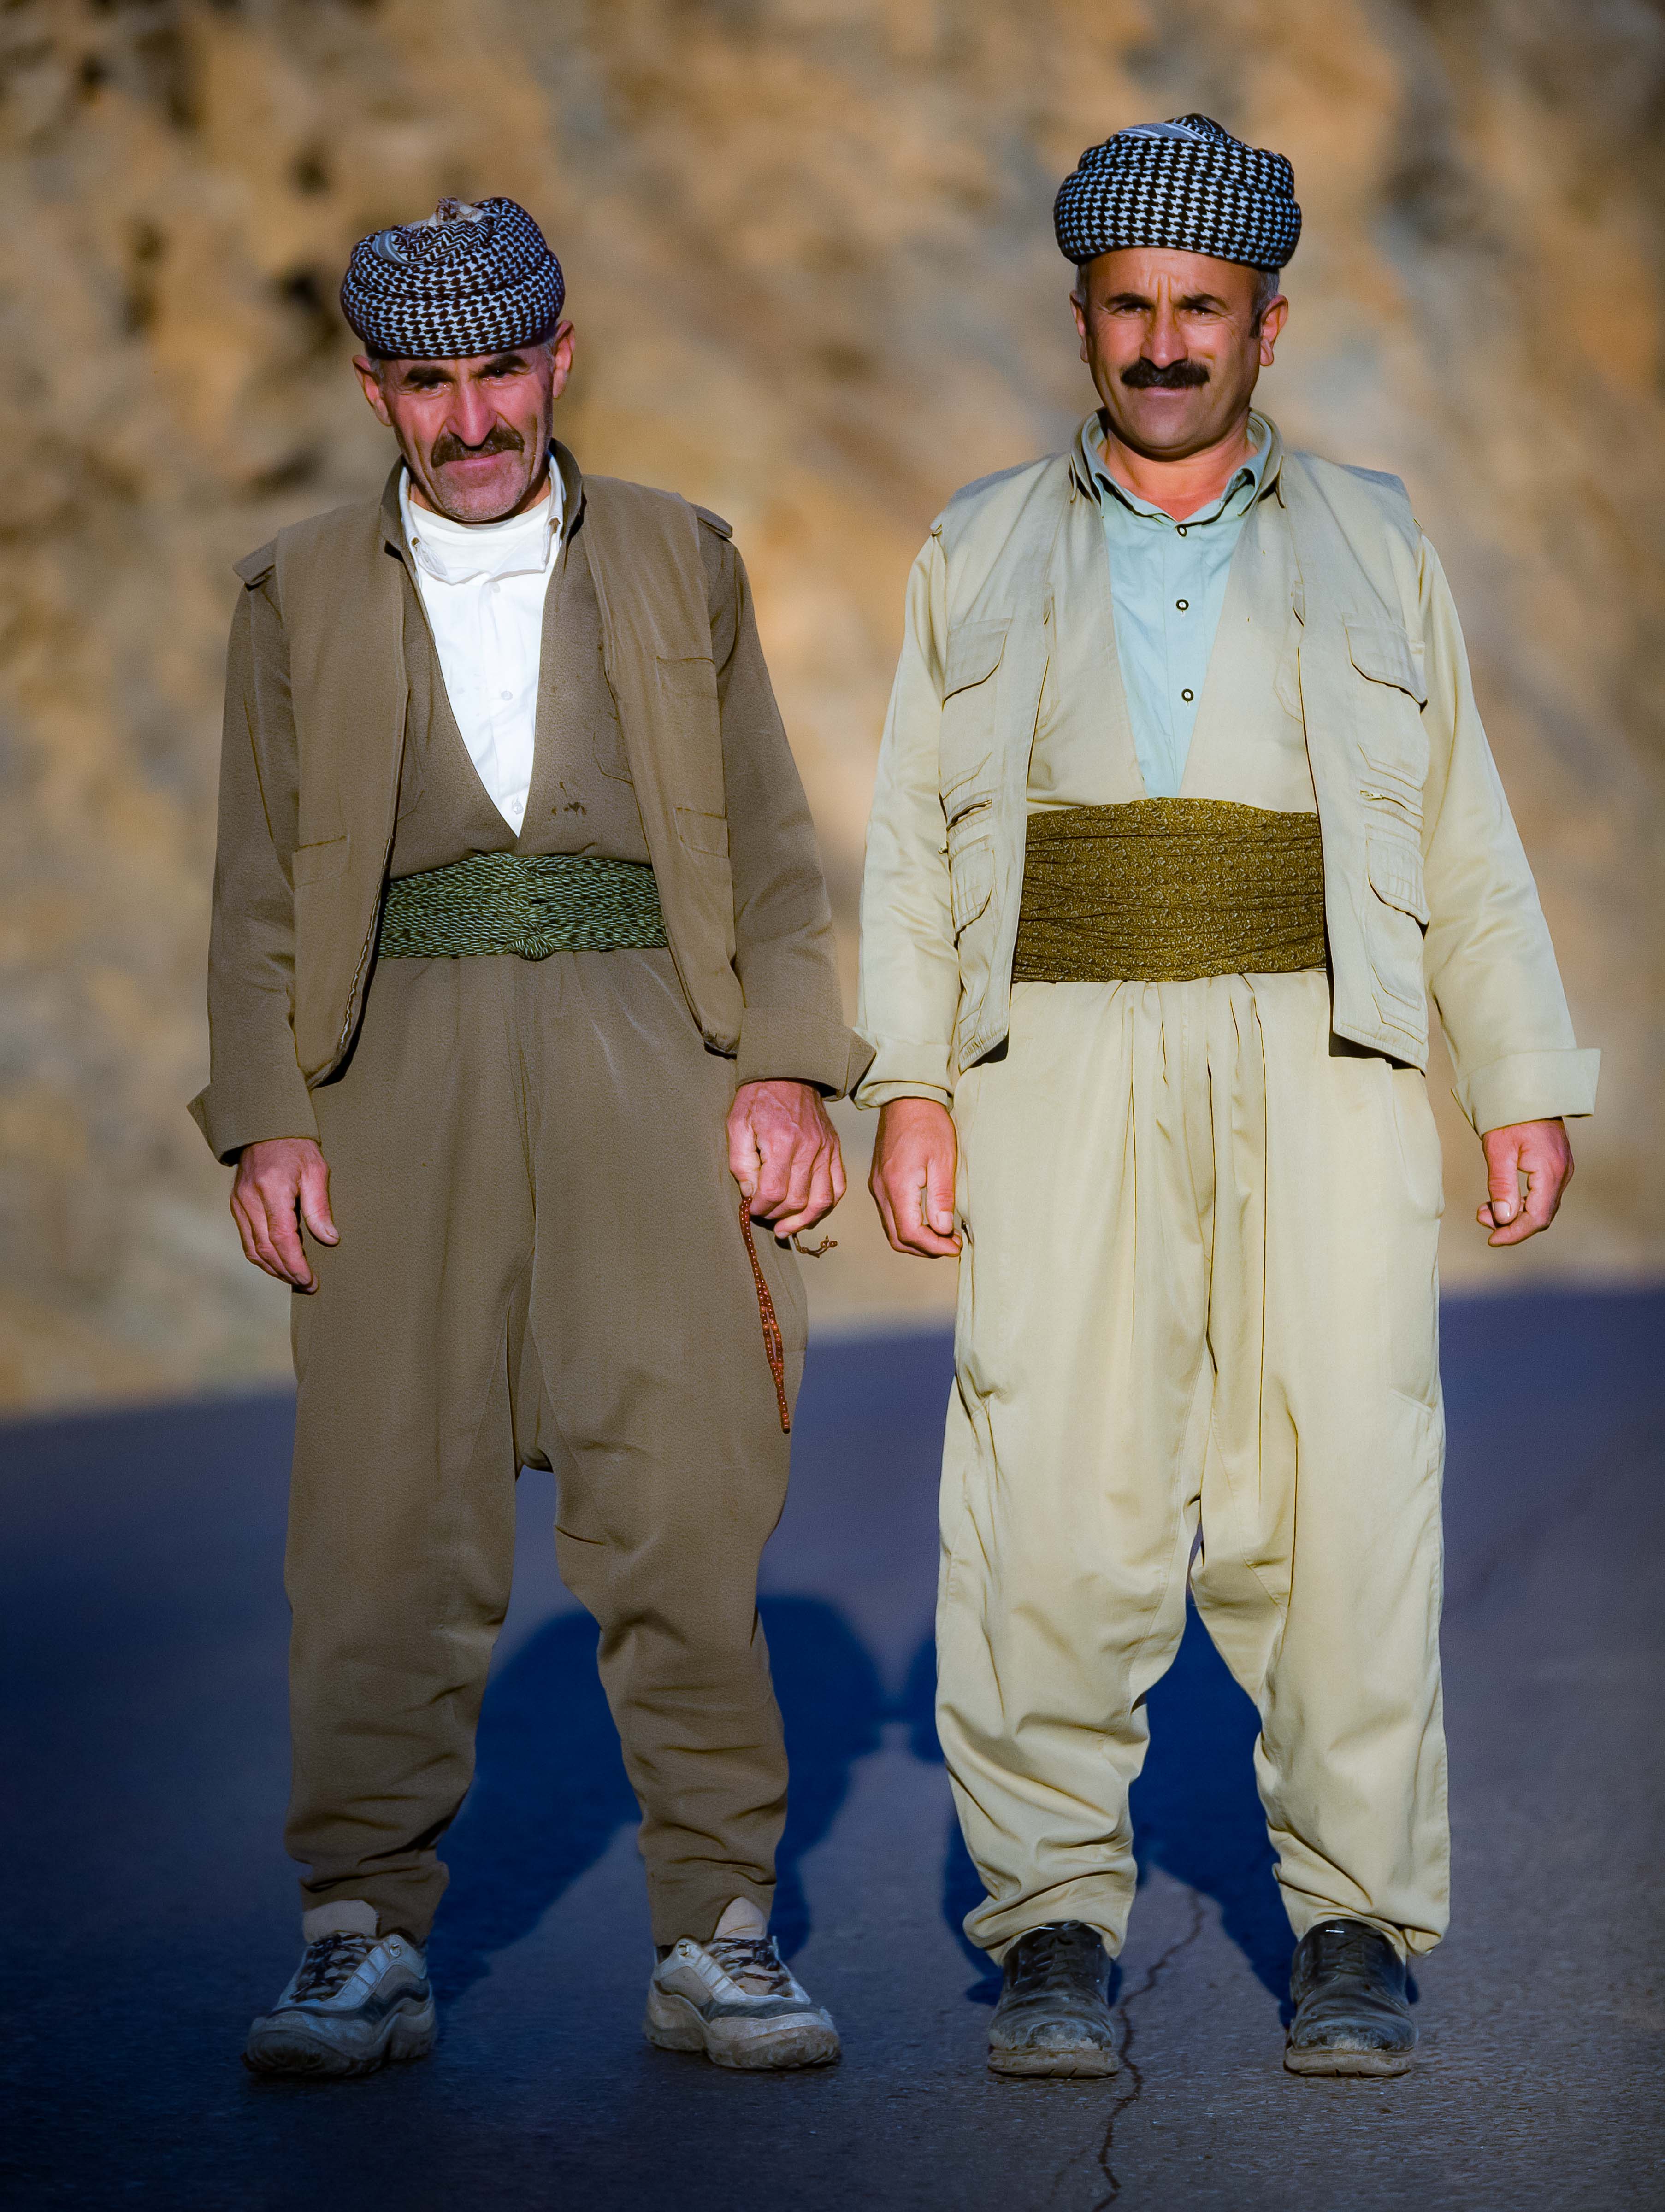 Turkey, Hakkari Province, Two Kurdish Men, 2009, IMG 1925